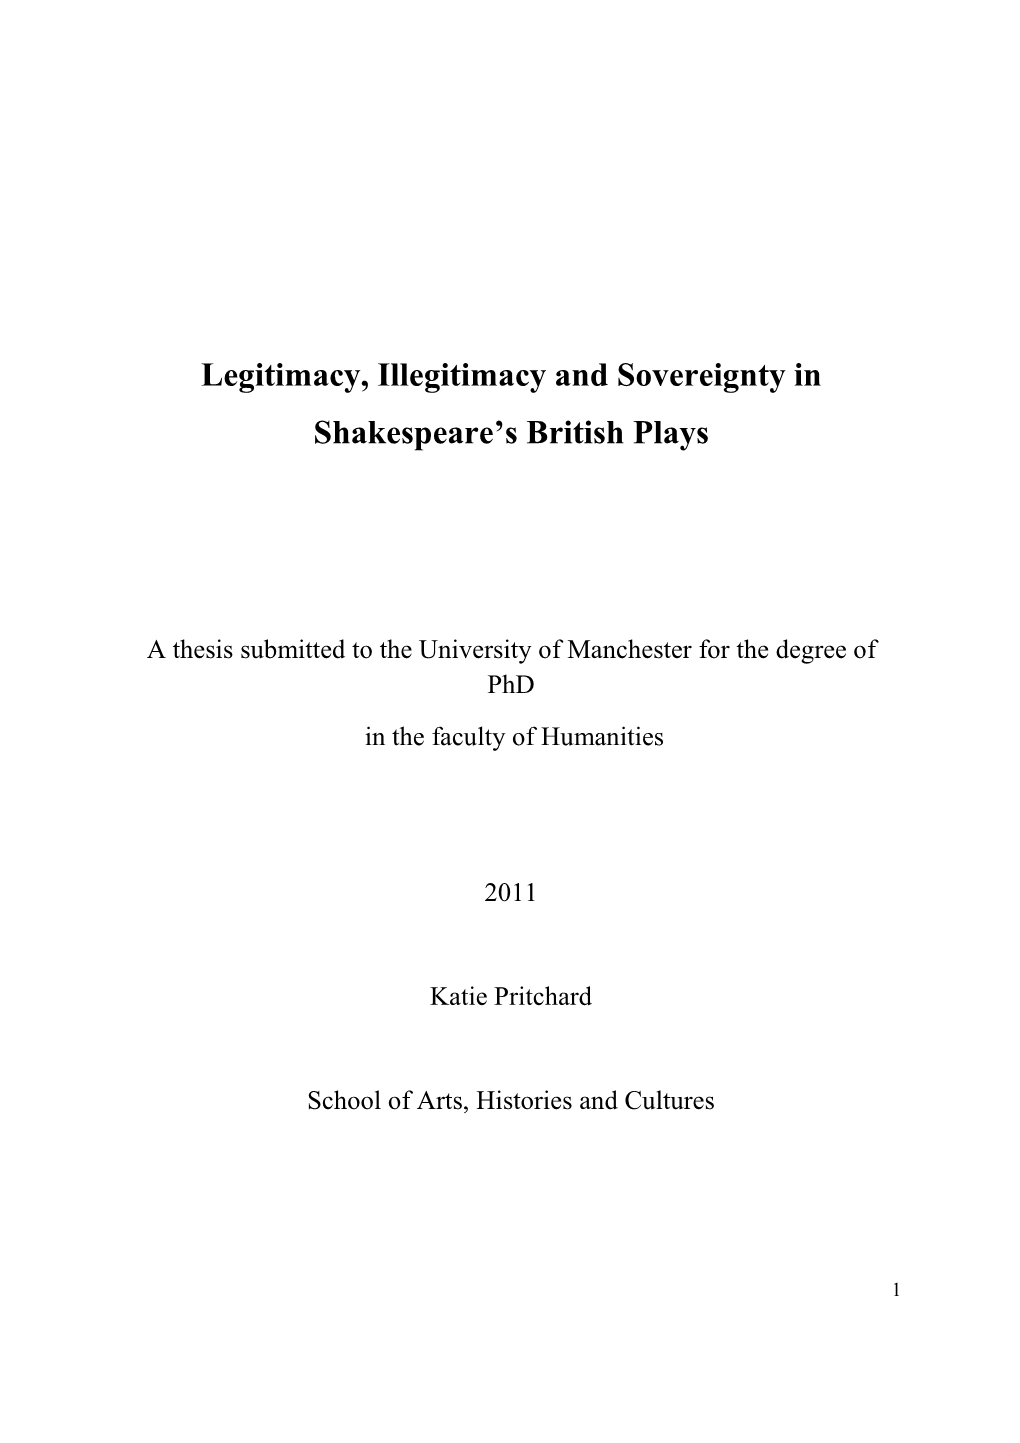 Legitimacy, Illegitimacy and Sovereignty in Shakespeare's